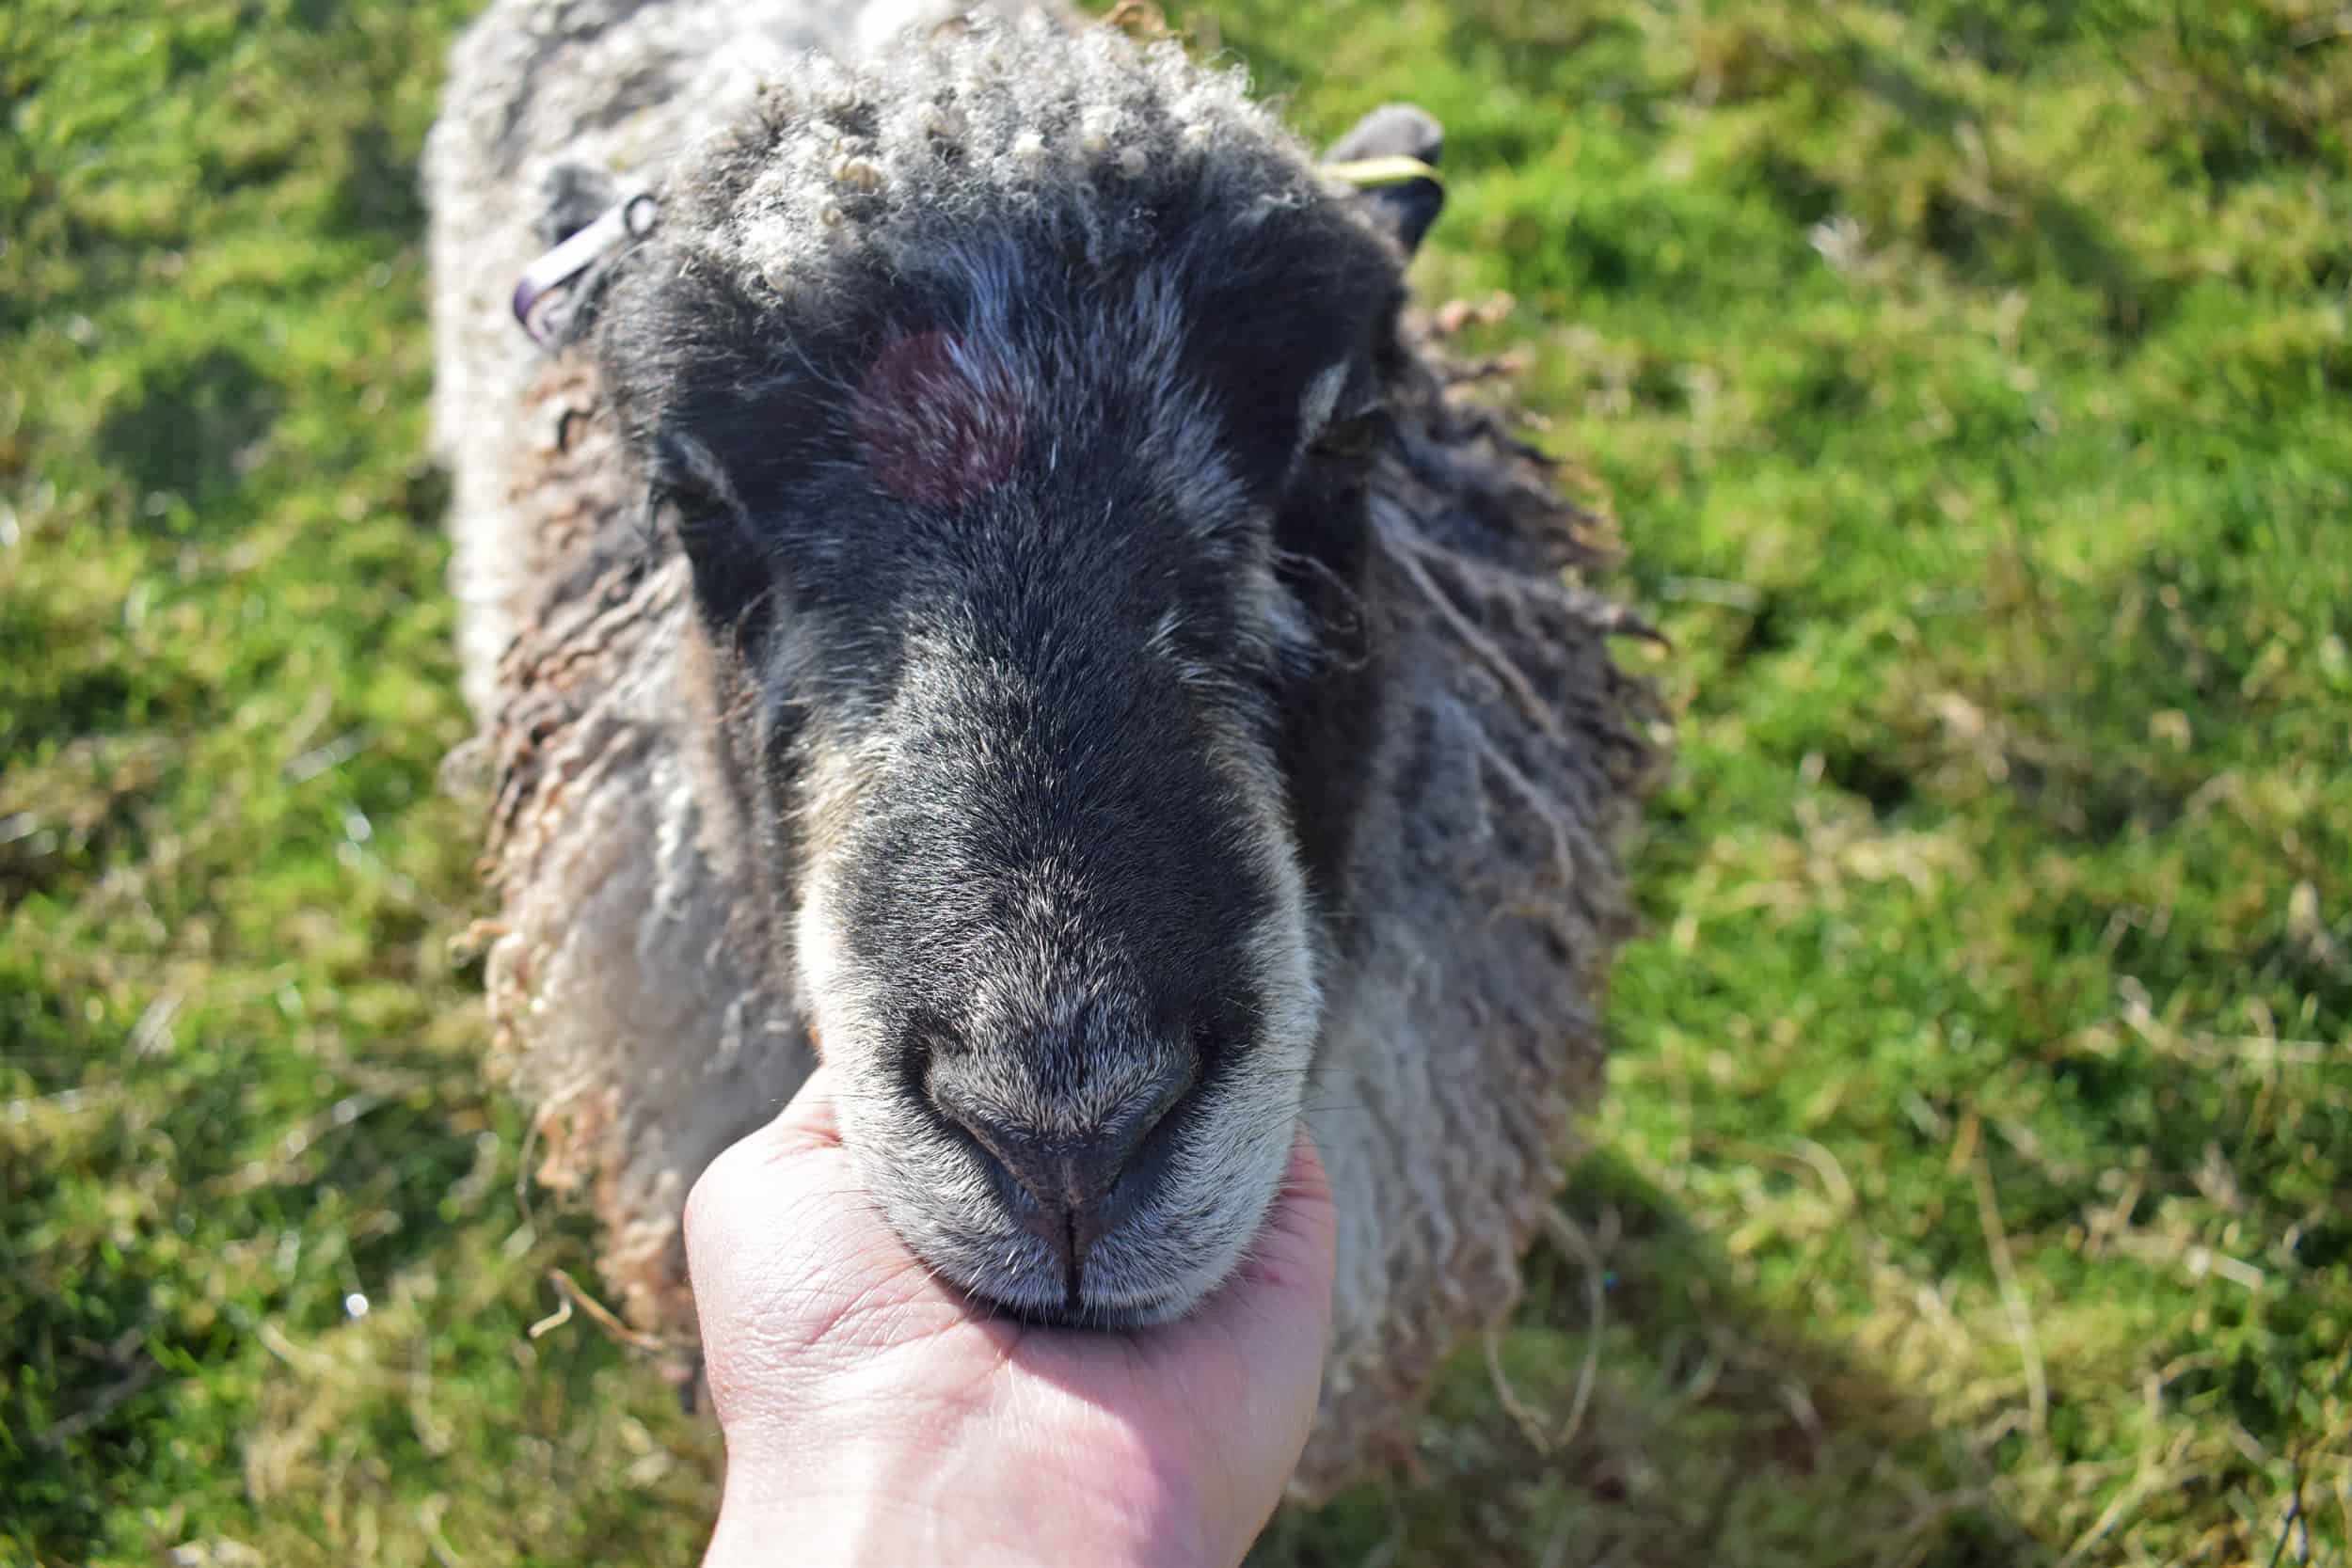 Jemima sheep farm animals coloured leicester longwool gotland sheep shetland ewe lamb kind fibre british wool grey animal friends